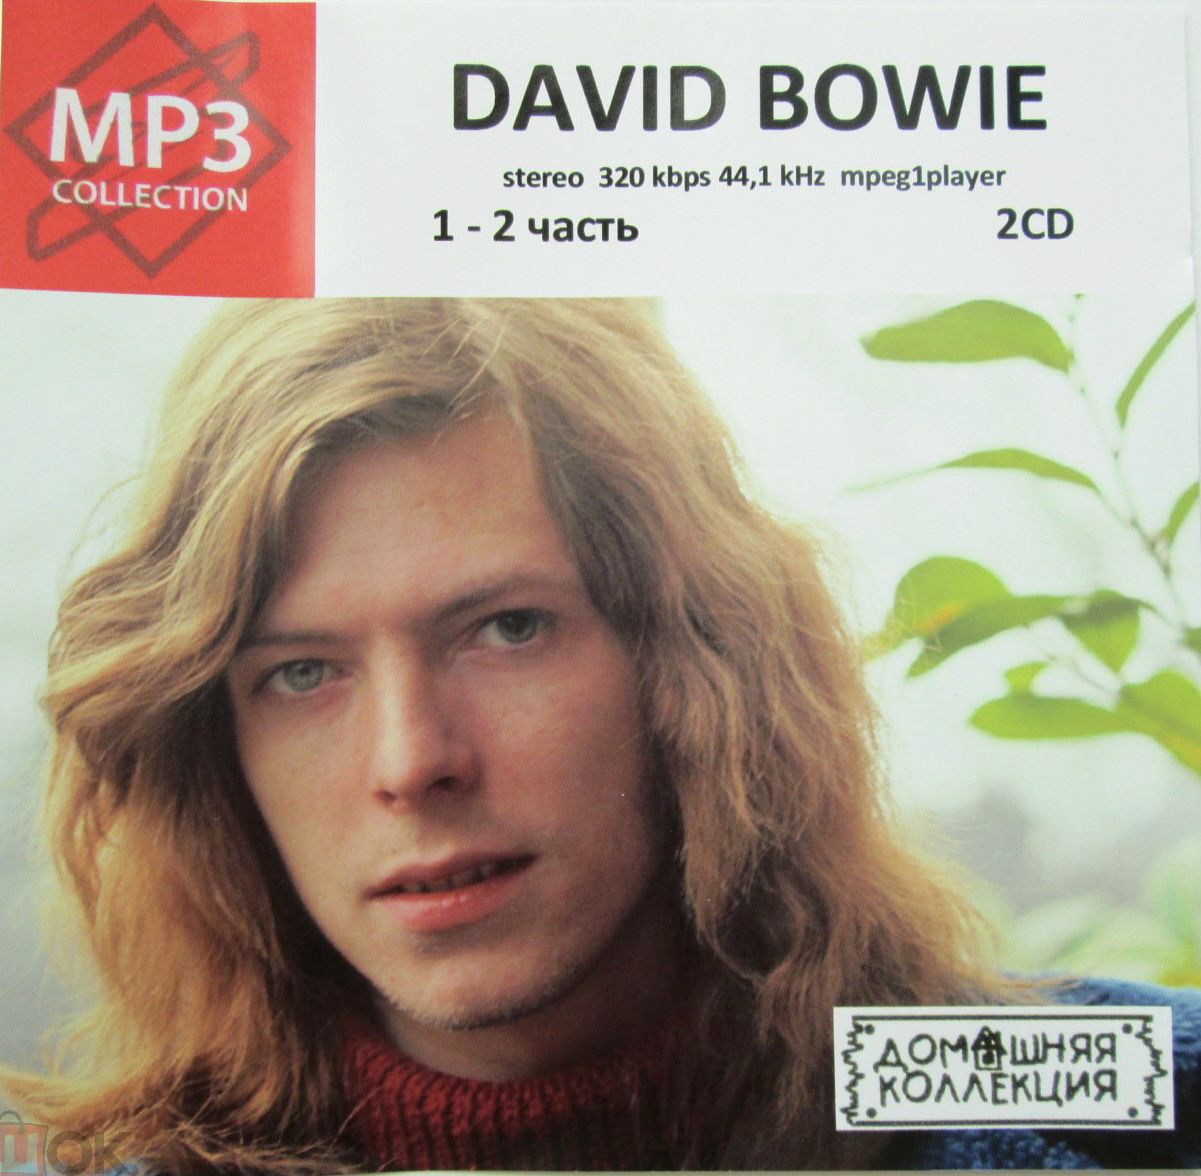 MP3 David Bowie 6CD - 33 MP3 Albums 1967/2016